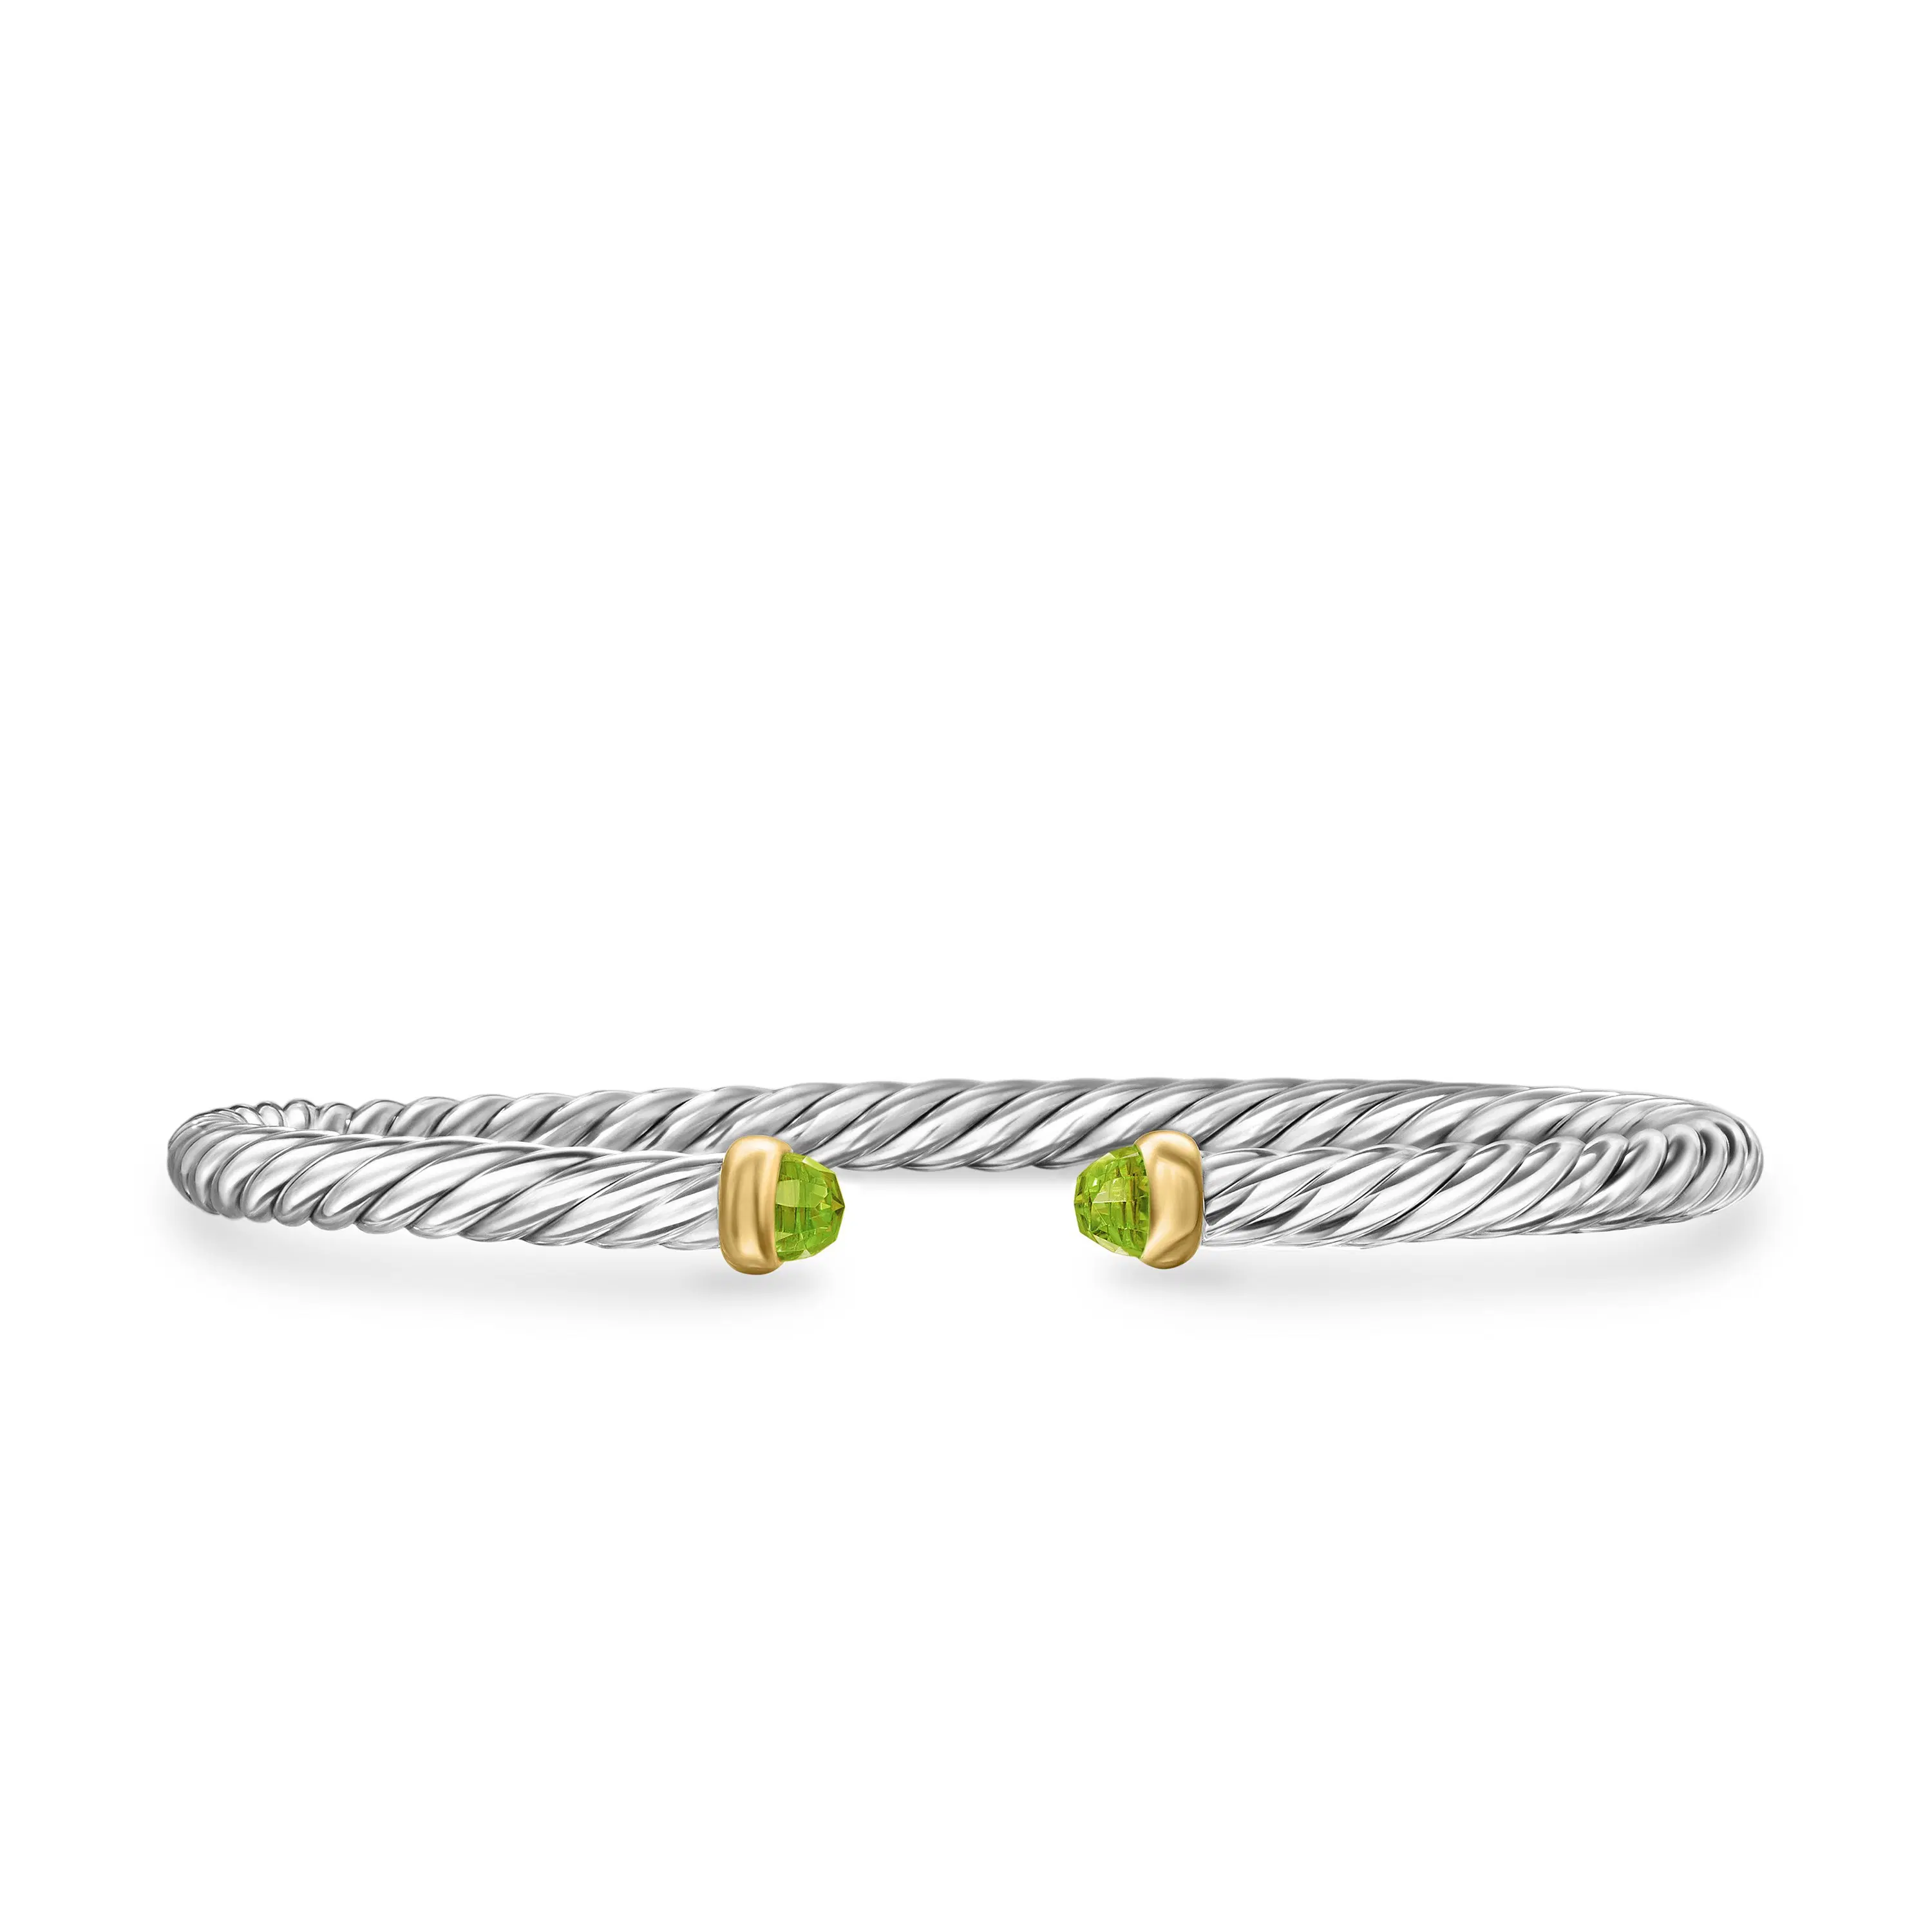 David Yurman Cable Flex Sterling Silver Bracelet with Peridot, Size Small